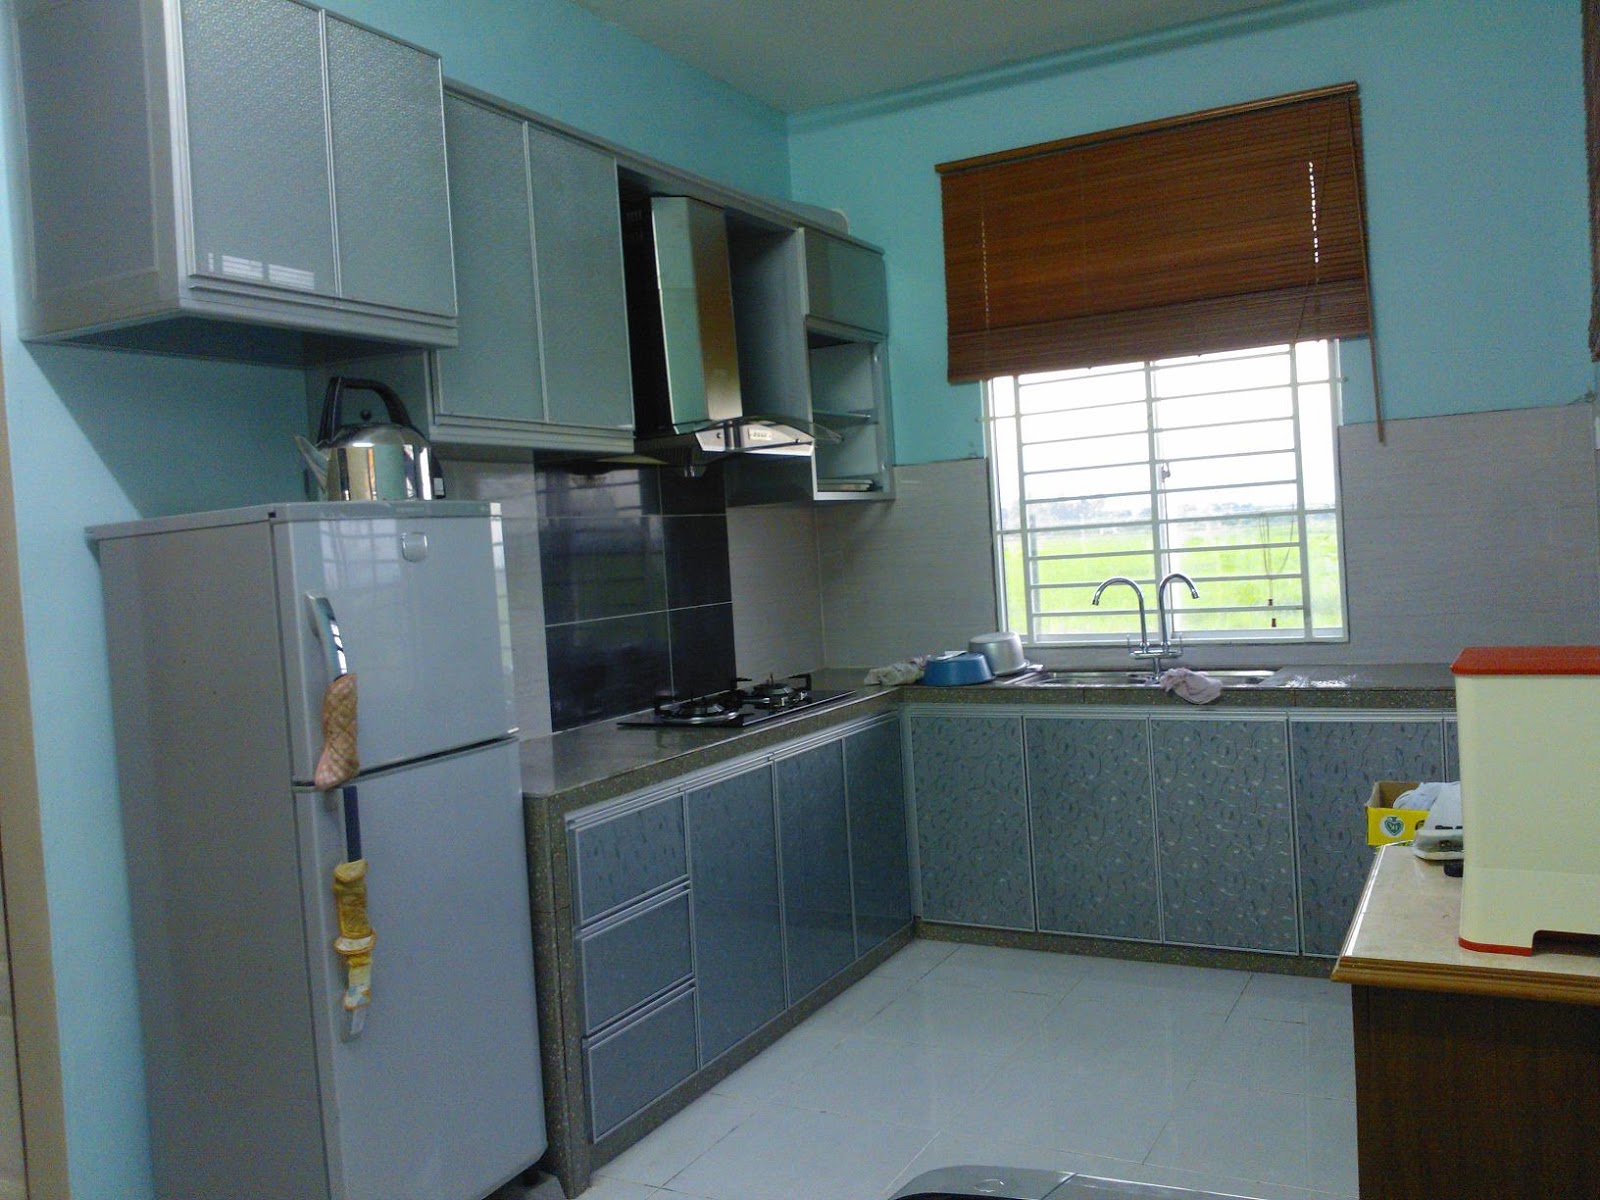 Dapur Minimalis Dengan Lemari Warna Biru - Desain Dapur Cantik Sederhana - HD Wallpaper 